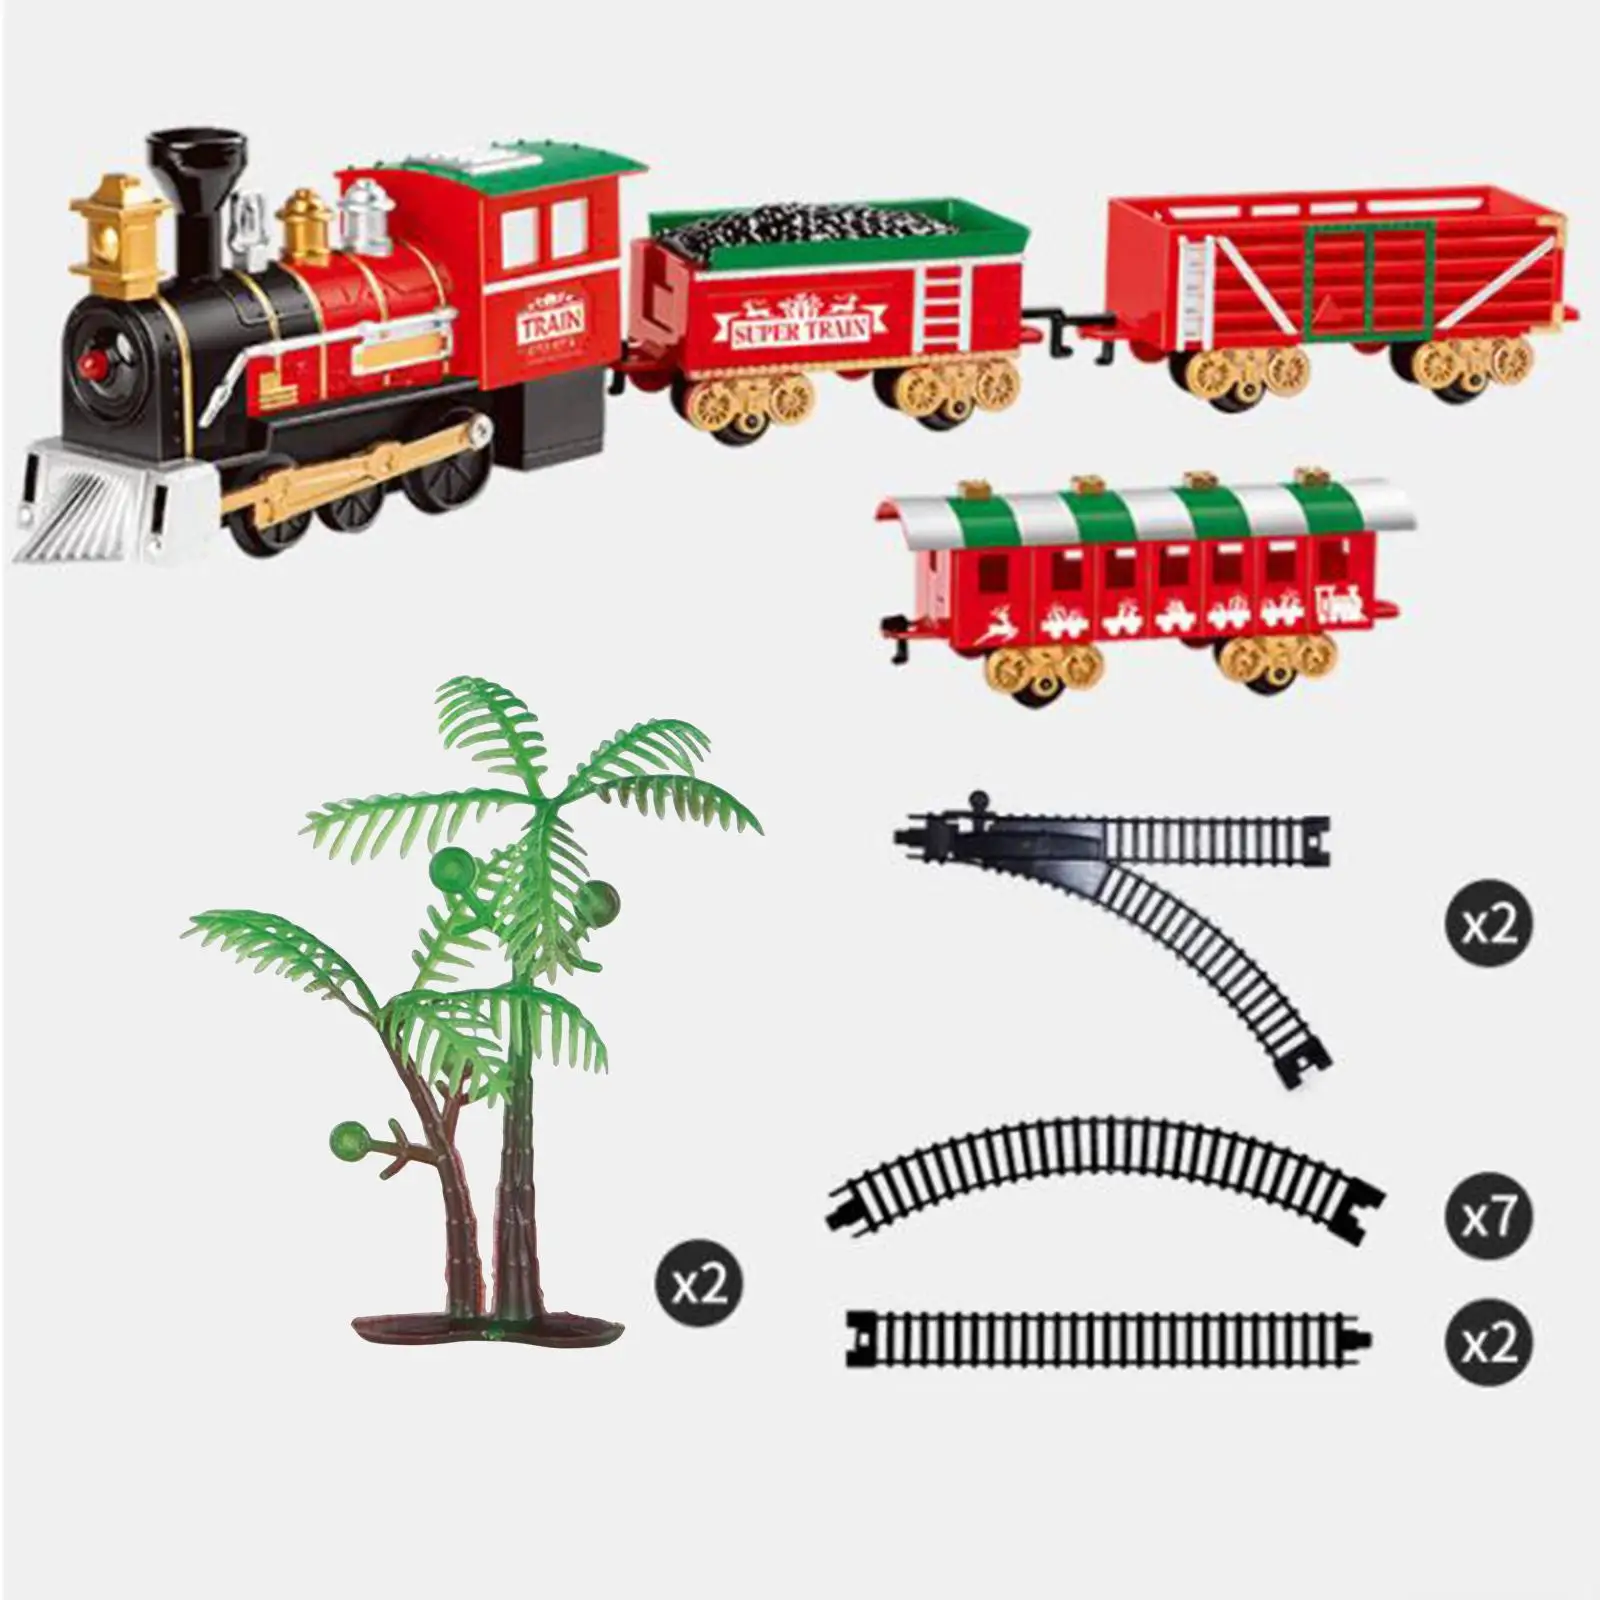 Christmas Tree Train Set Railway Kit Early Leaning Education Toy Railway Track Set for Preschool Girls Boys Kids Toddler